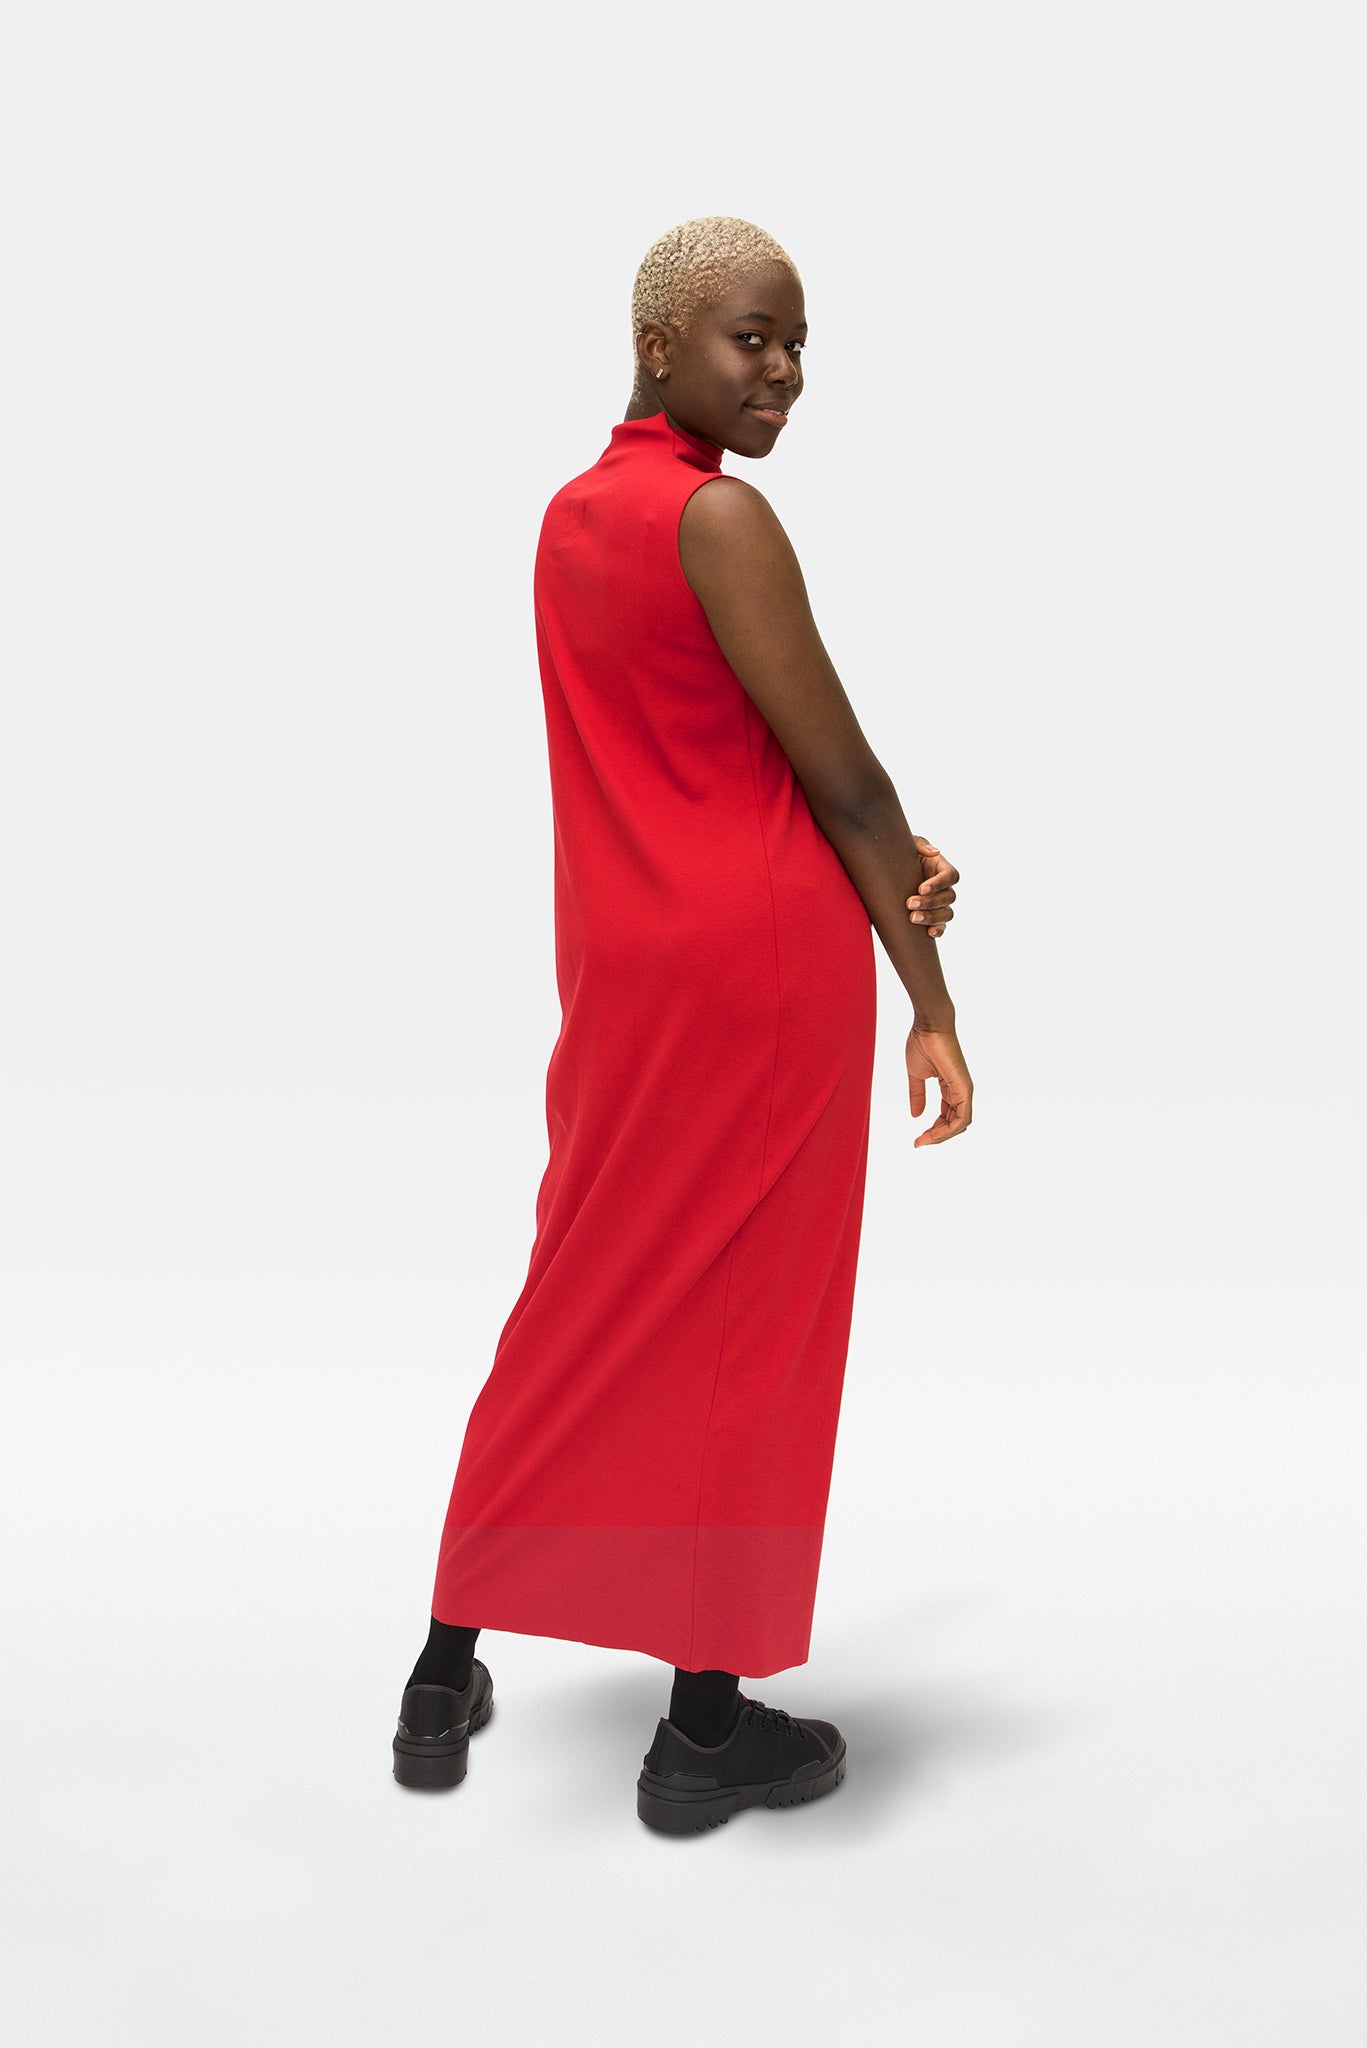 A.BCH A.14 Cherry Sleeveless Skivvy Dress in Organic Cotton Rib